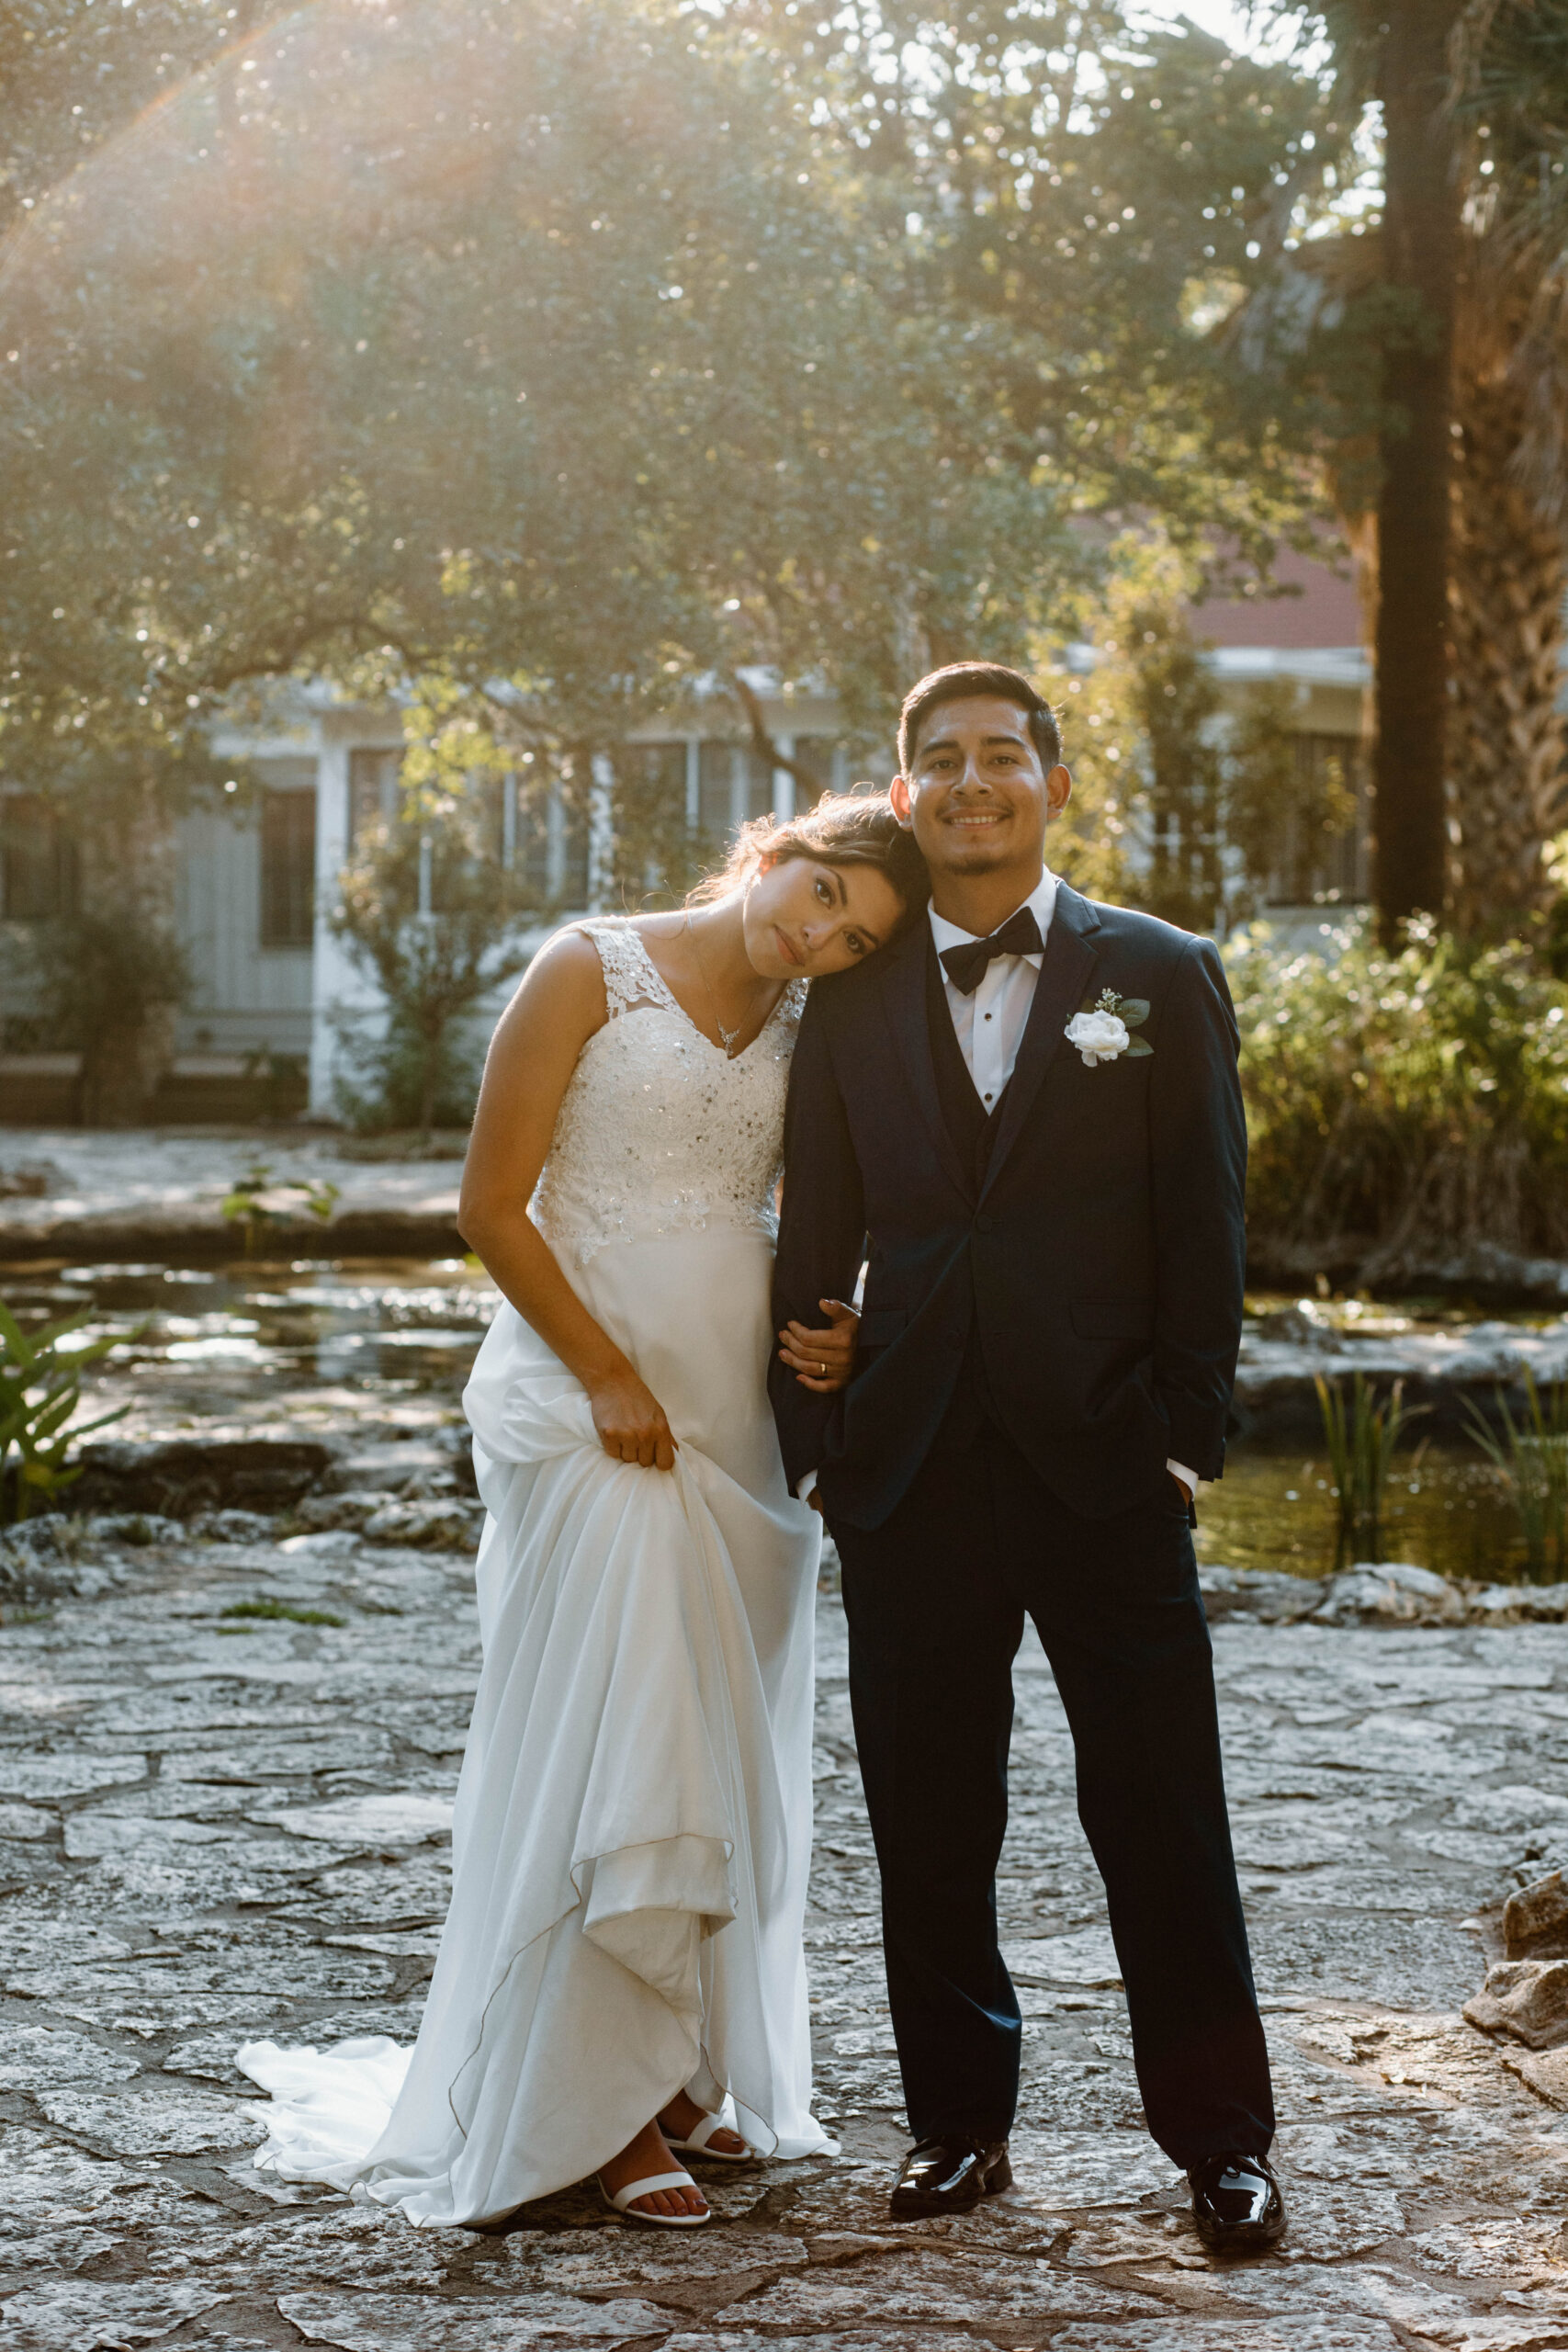 Wedding photograph taken at an intimate Mayfield Garden wedding. Photograph by Bare Moments Photography. Taken during the summer in Austin, Texas. 